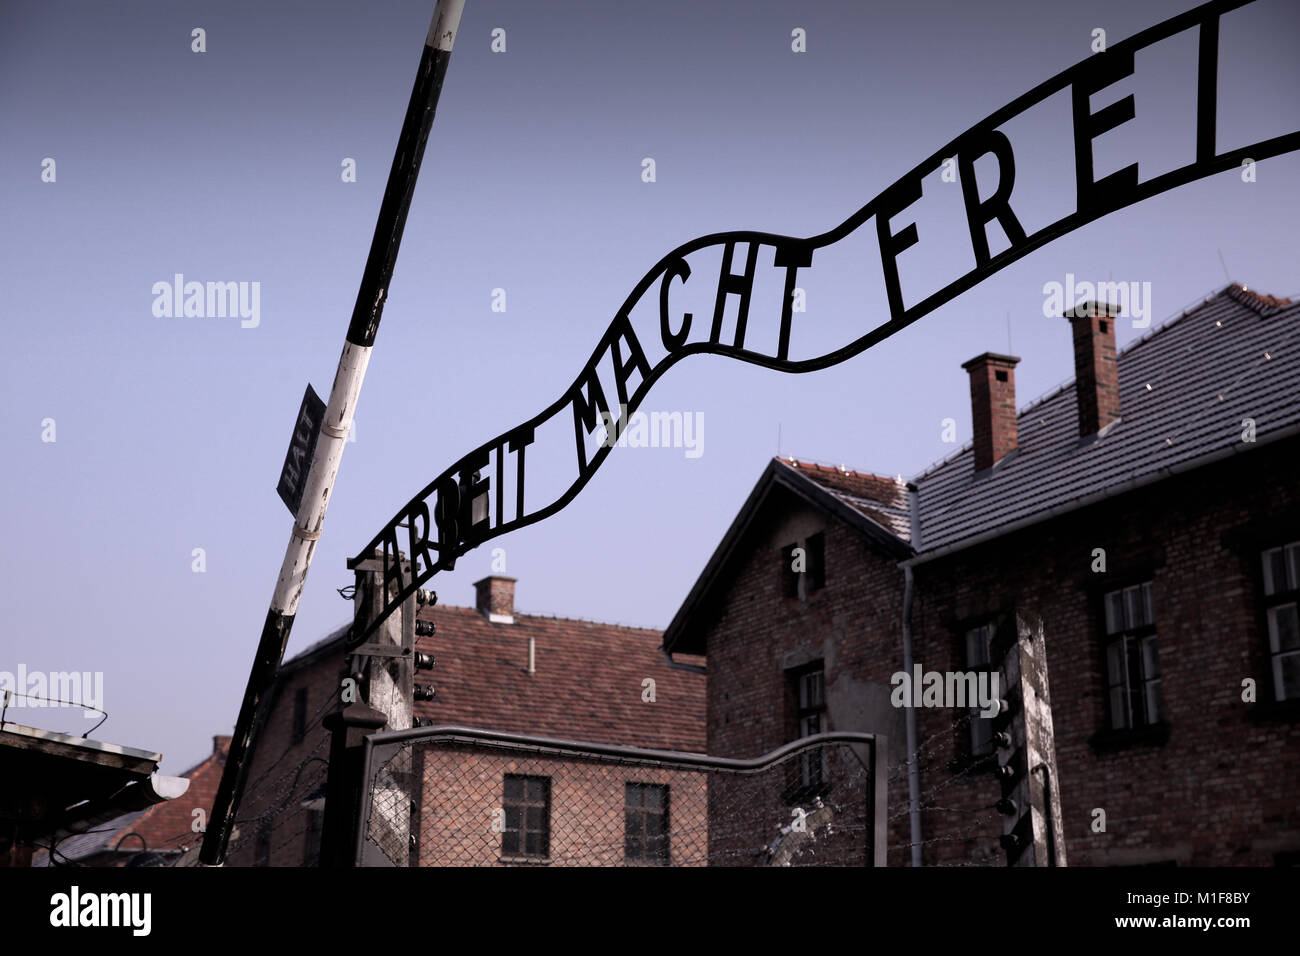 Entrance to Auschwitz I showing chilling iconic signage 'Arbeit Macht Frei' - Work Sets You Free Stock Photo